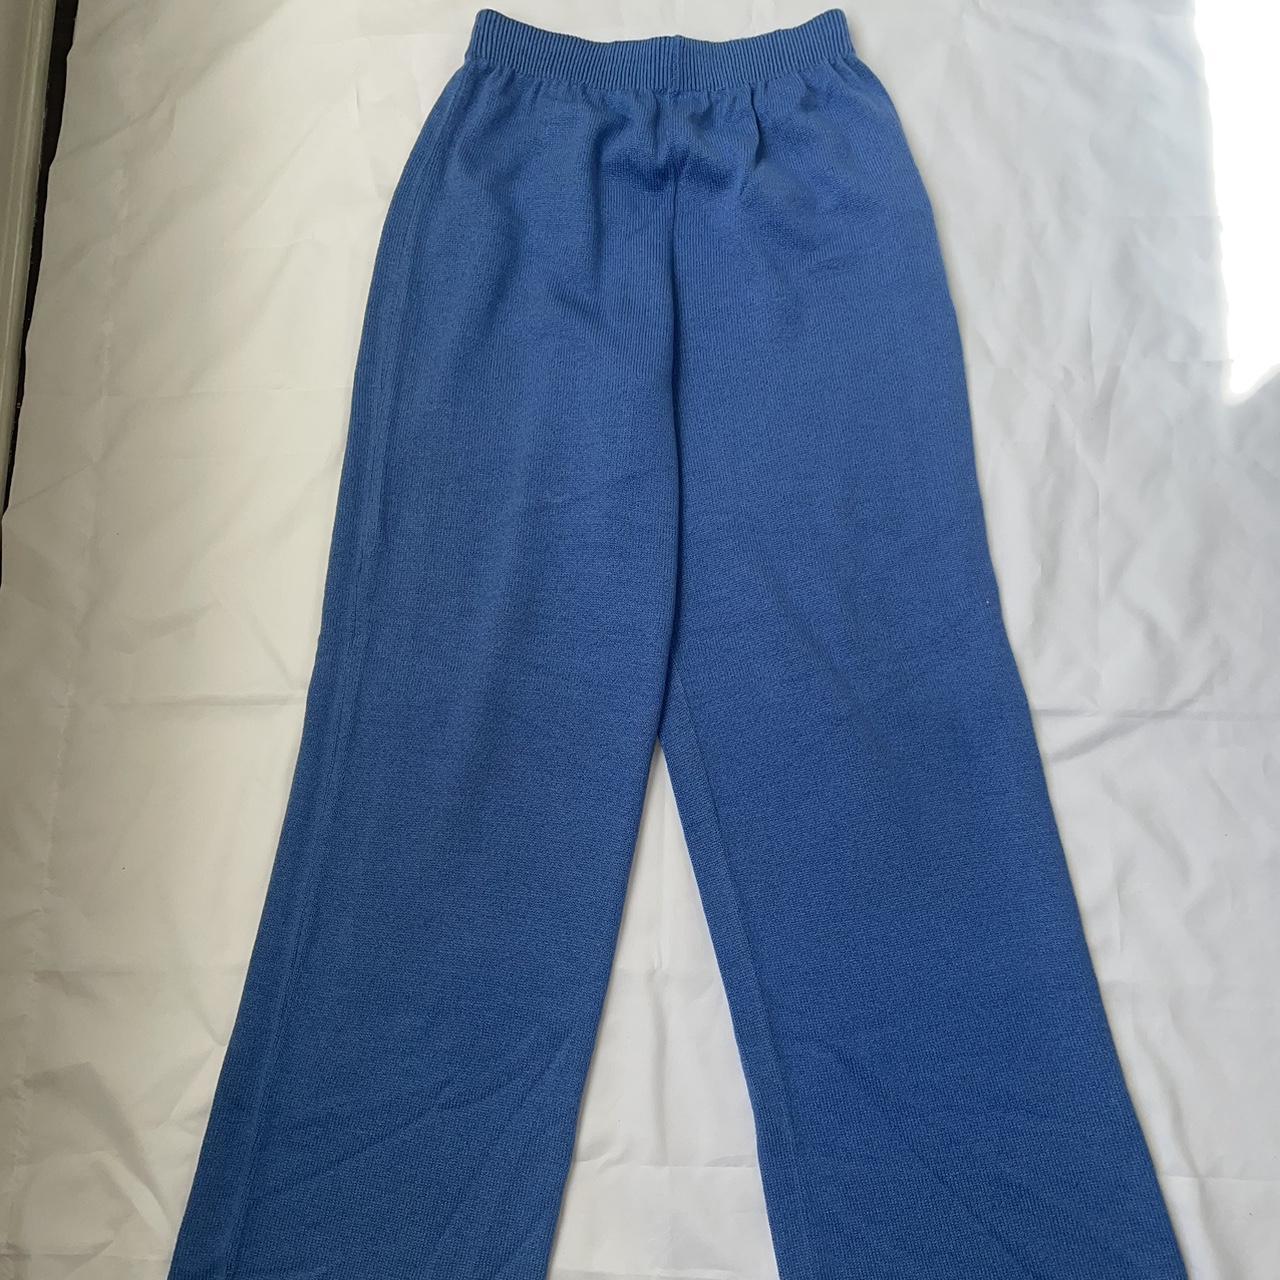 Blue knit pants Super comfy Size small - Depop